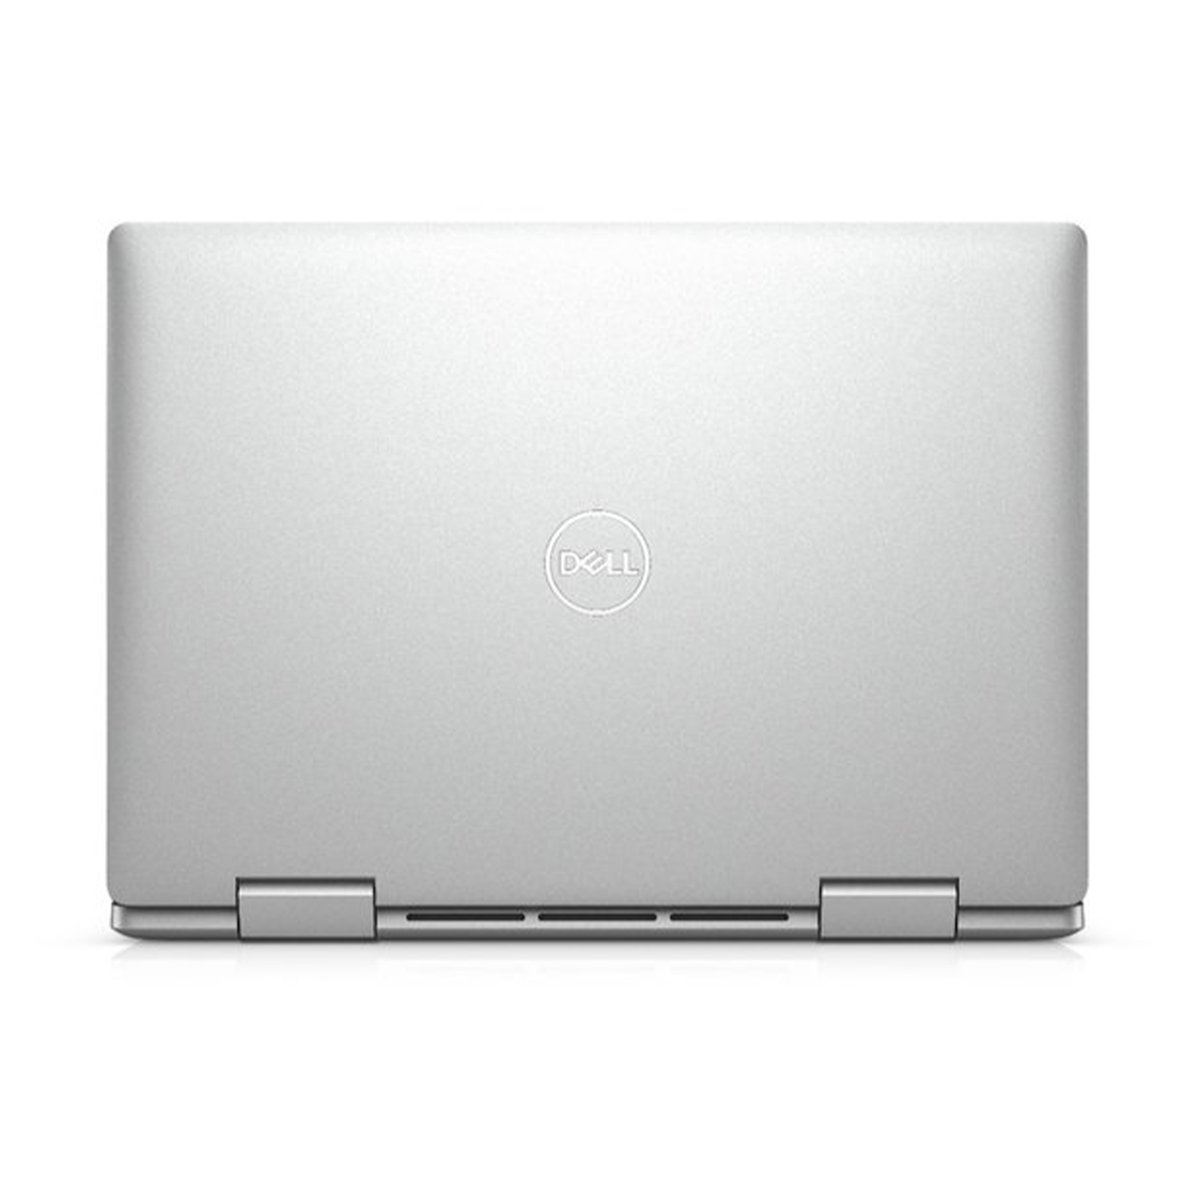 Dell 5410-INS14-5009, 2-in-1 Laptop – Core i5-1135G7,8GB RAM, 256GB SSD,Intel(R) Iris(R) Xe Graphics, WinDOWS 10, 14inch FHD, Silver, English/Arabic Keyboard